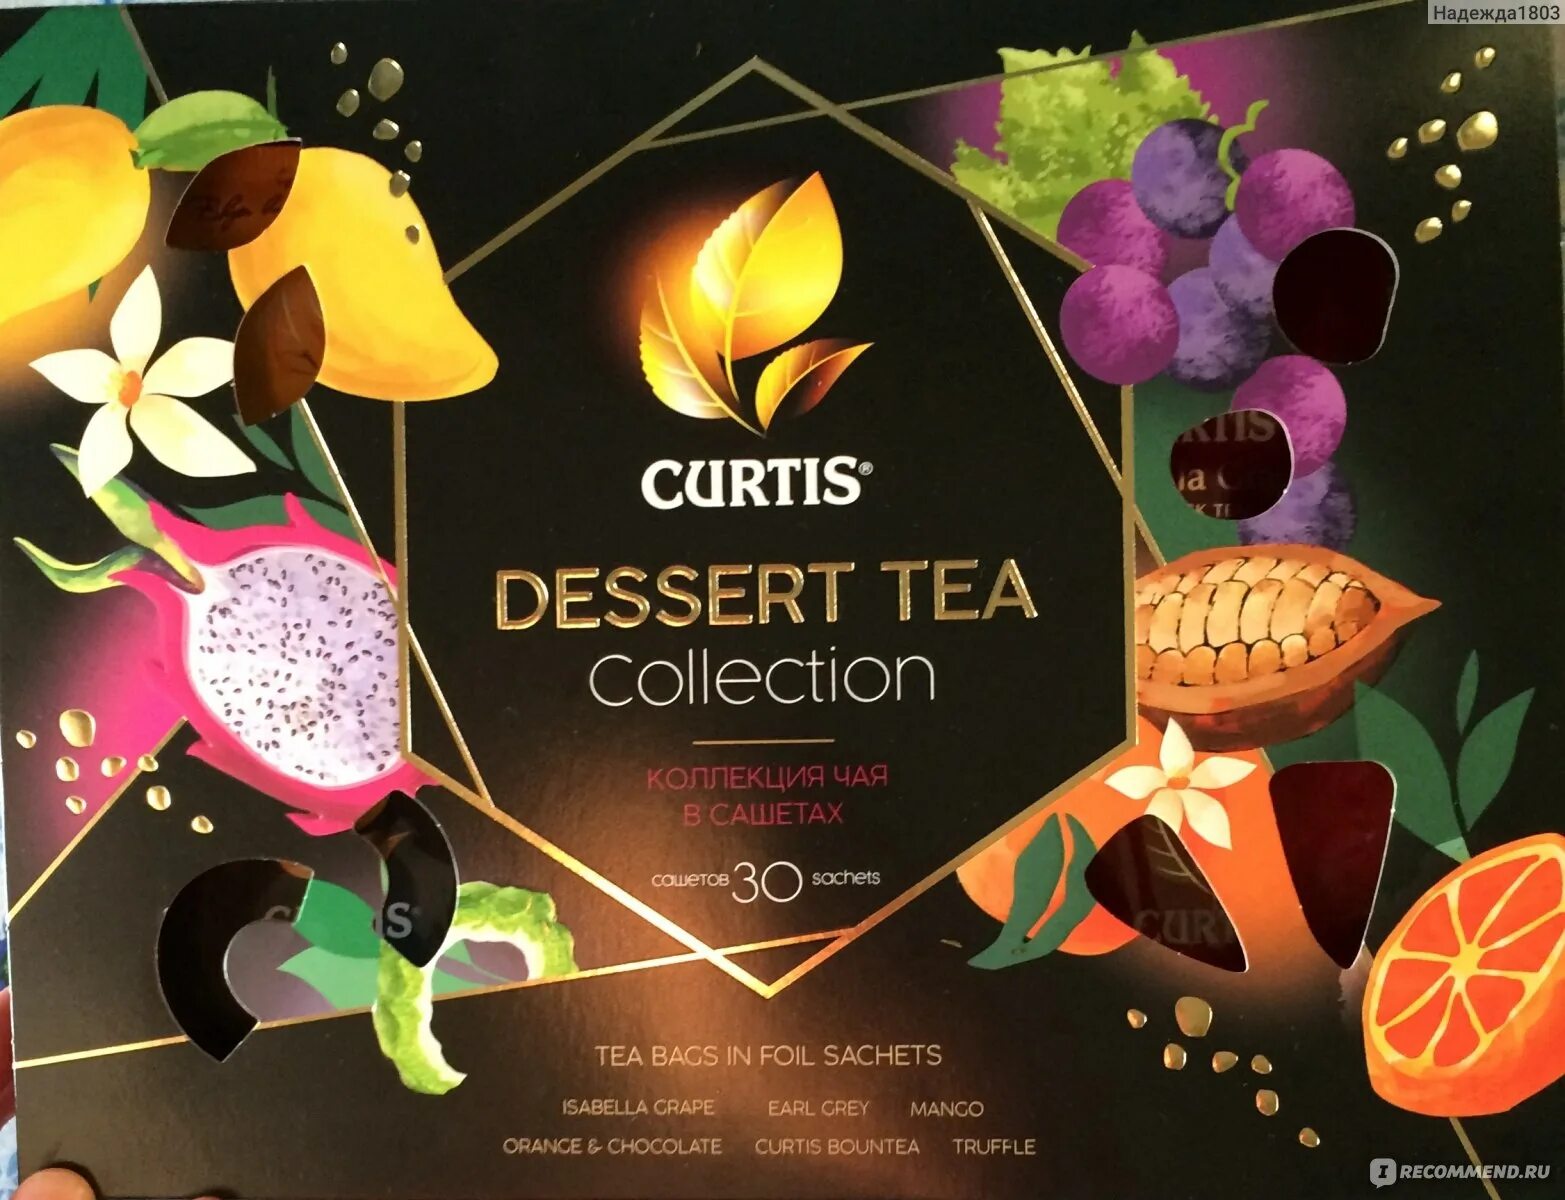 Curtis dessert collection. Чай Кертис Dessert Tea collection. Curtis Dessert Tea collection 6 вкусов. Curtis чай Dessert Tea collection 30. Набор чая Кертис ассорти.